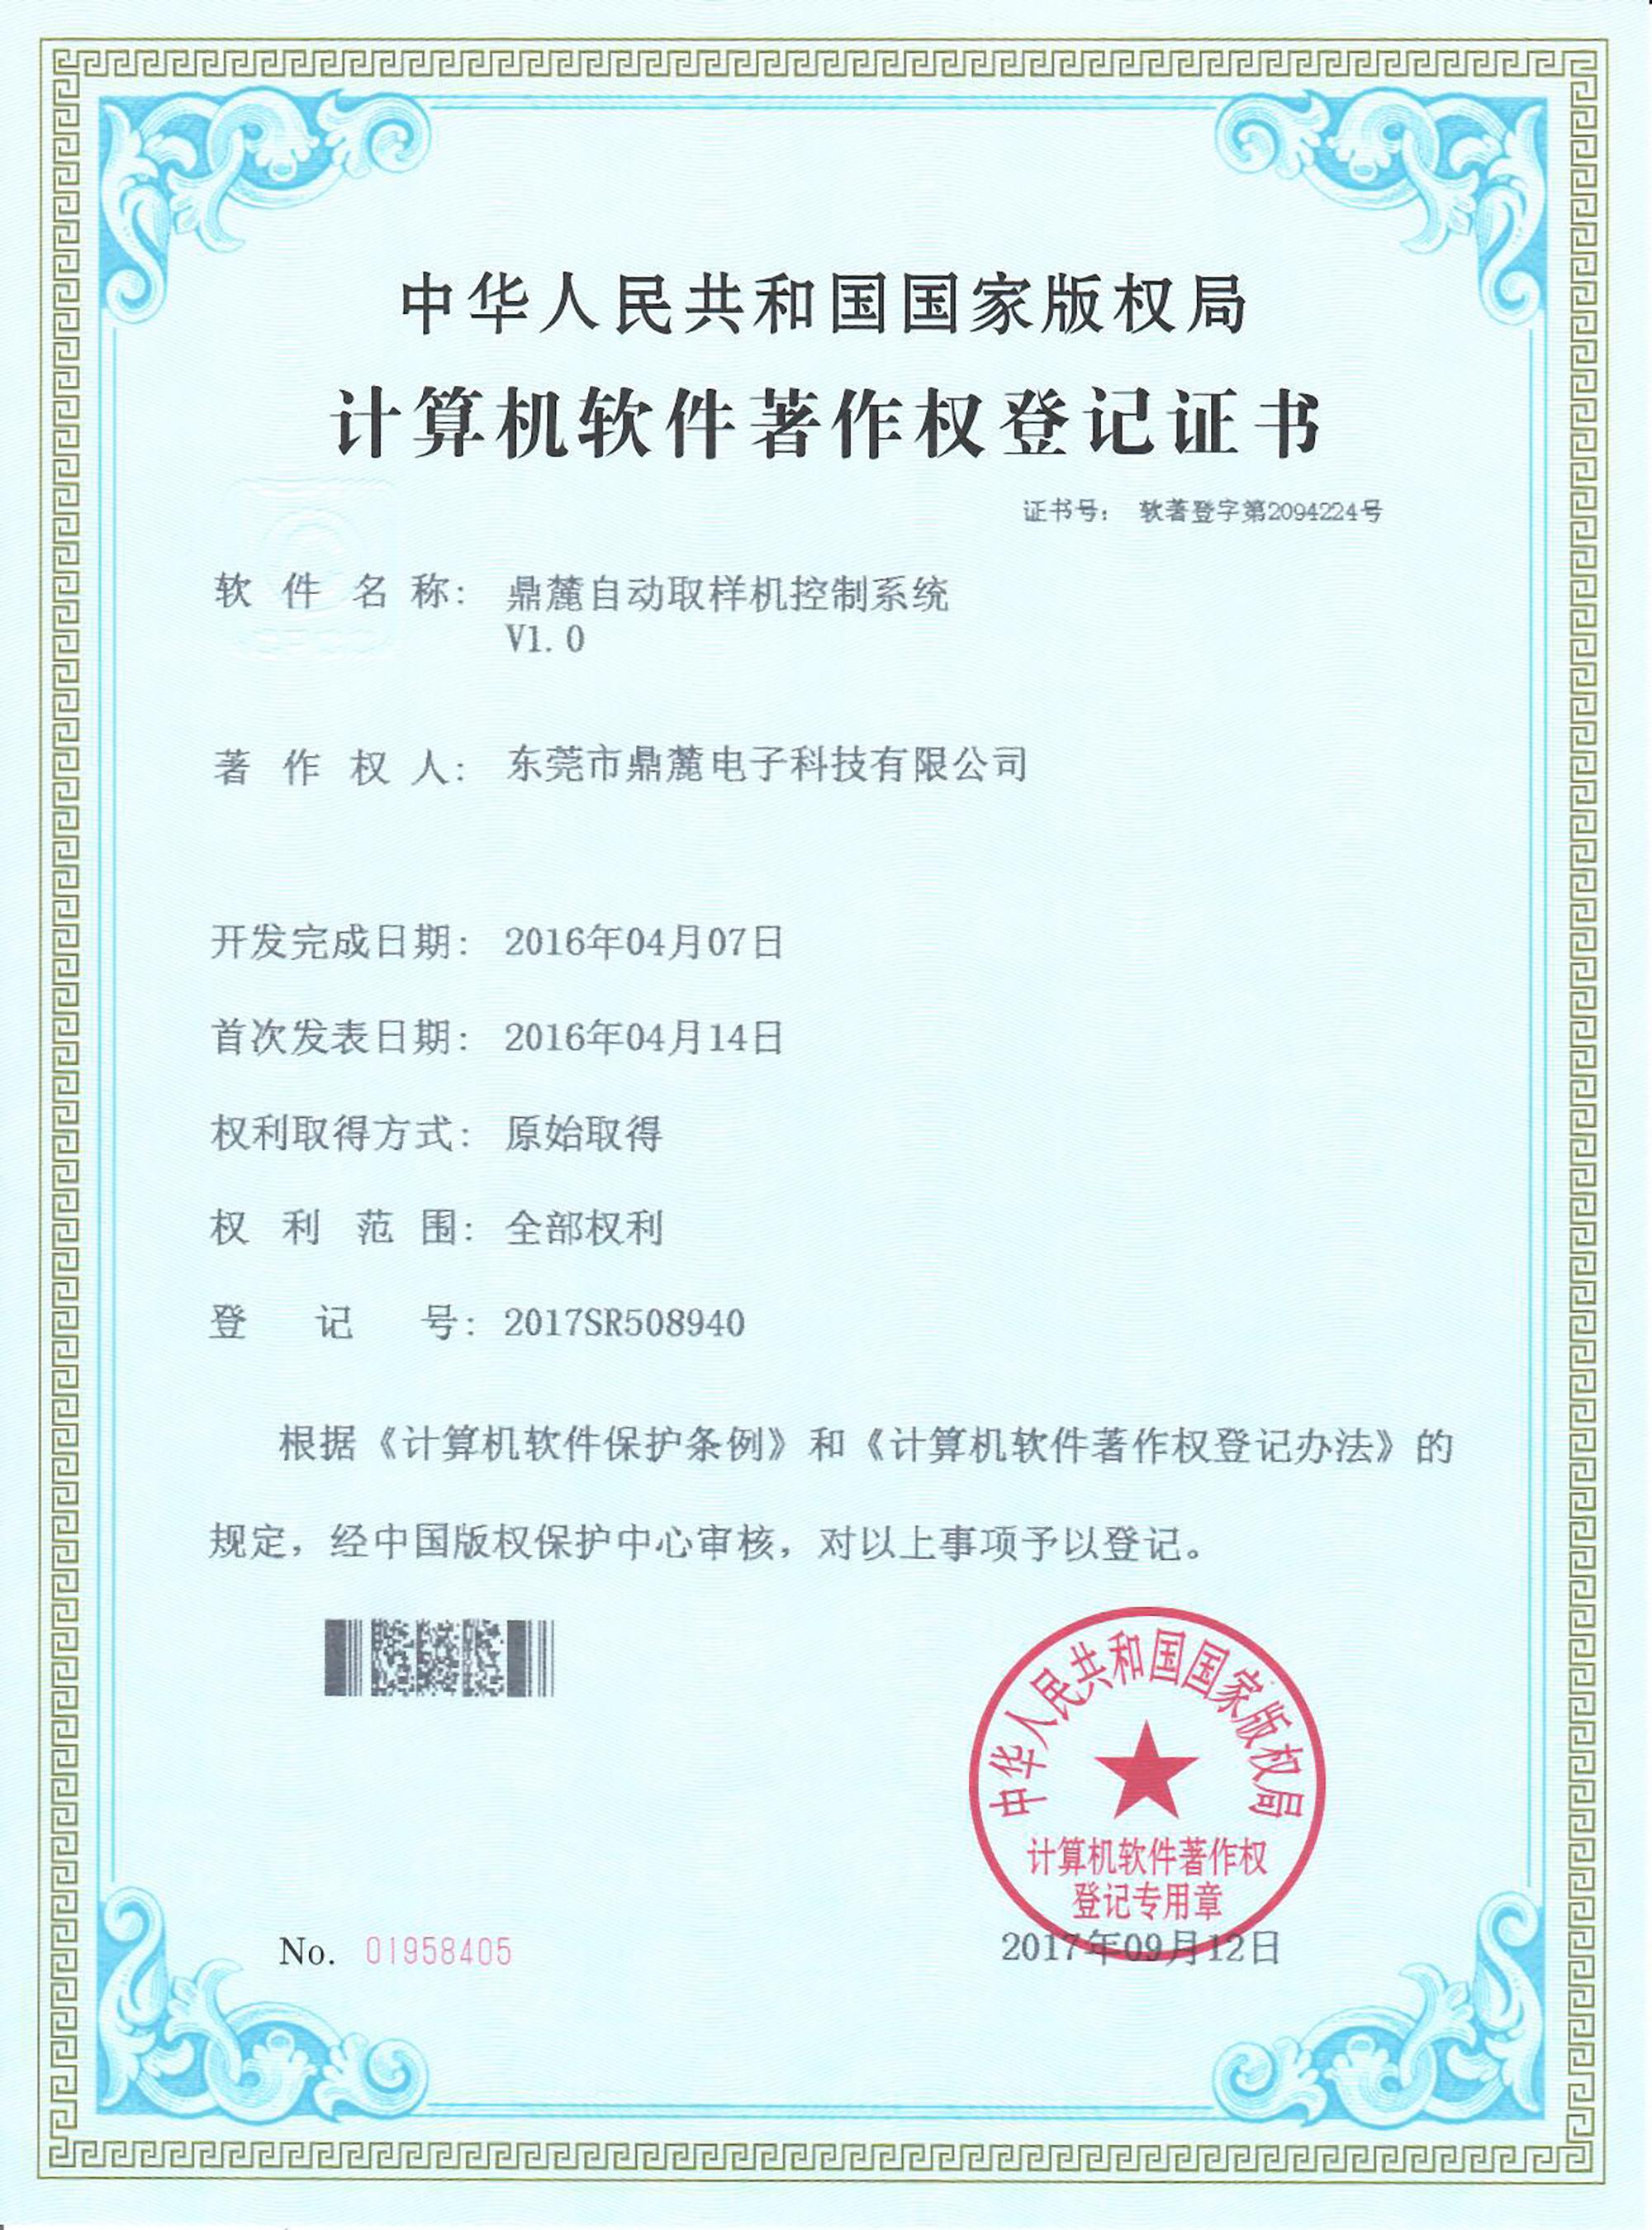 Copyright Registration Certificate for Sampling Machine Software